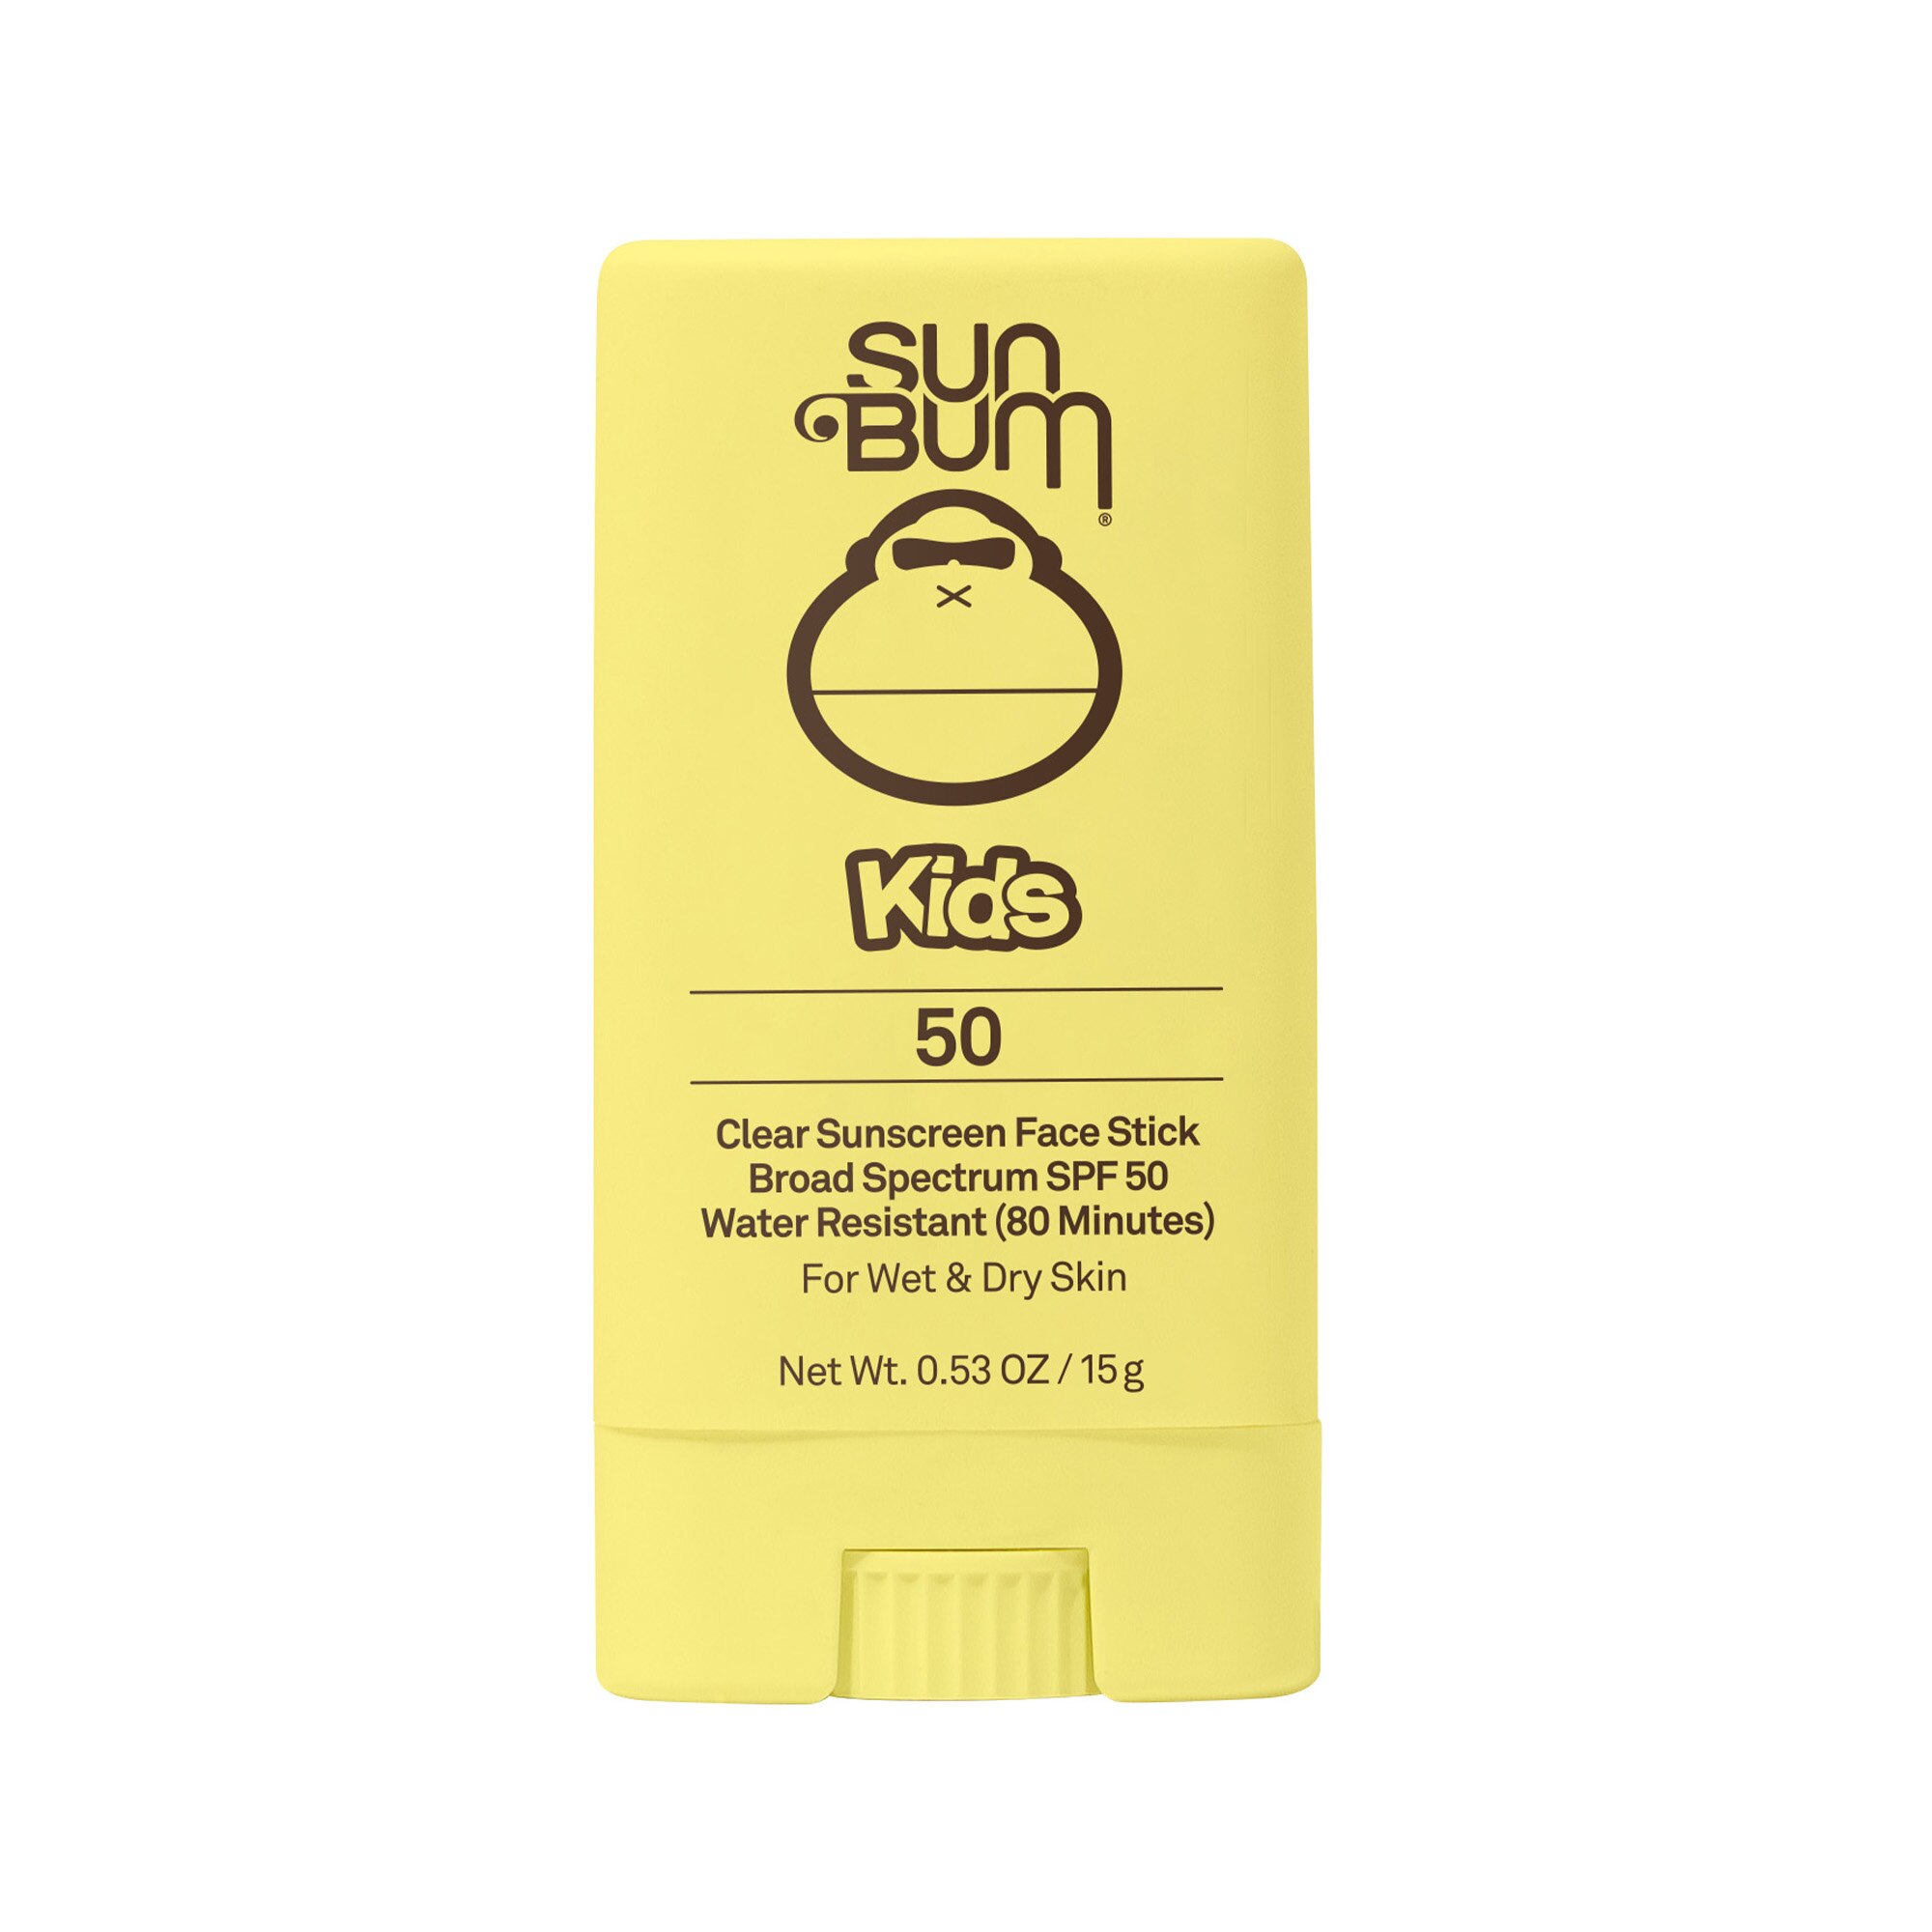 Sun Bum Kids Clear Sunscreen Face Stick, SPF 50, .53 Oz - 0.53 Oz , CVS